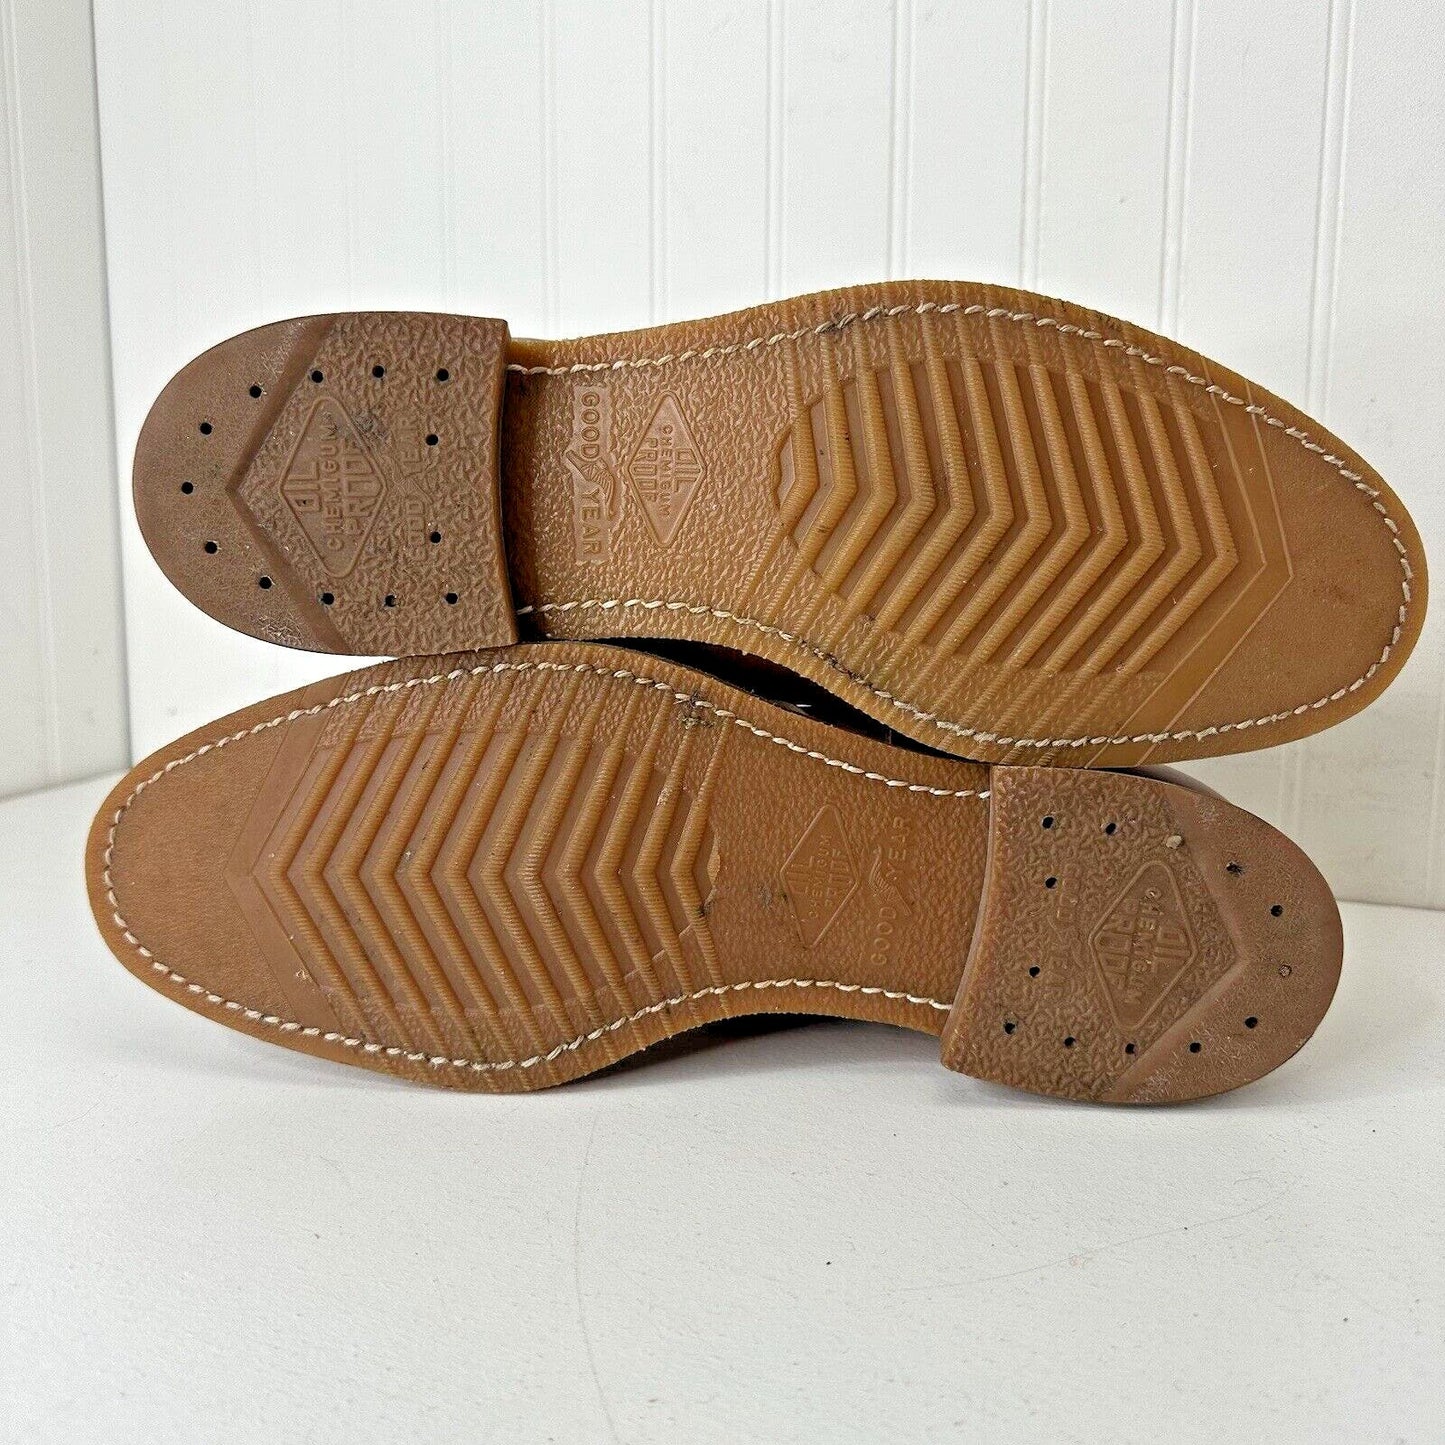 Foot-So-Port Supreme Mens 6 Inch Dress Boots Moc Toe Vintage Brown Leather 10